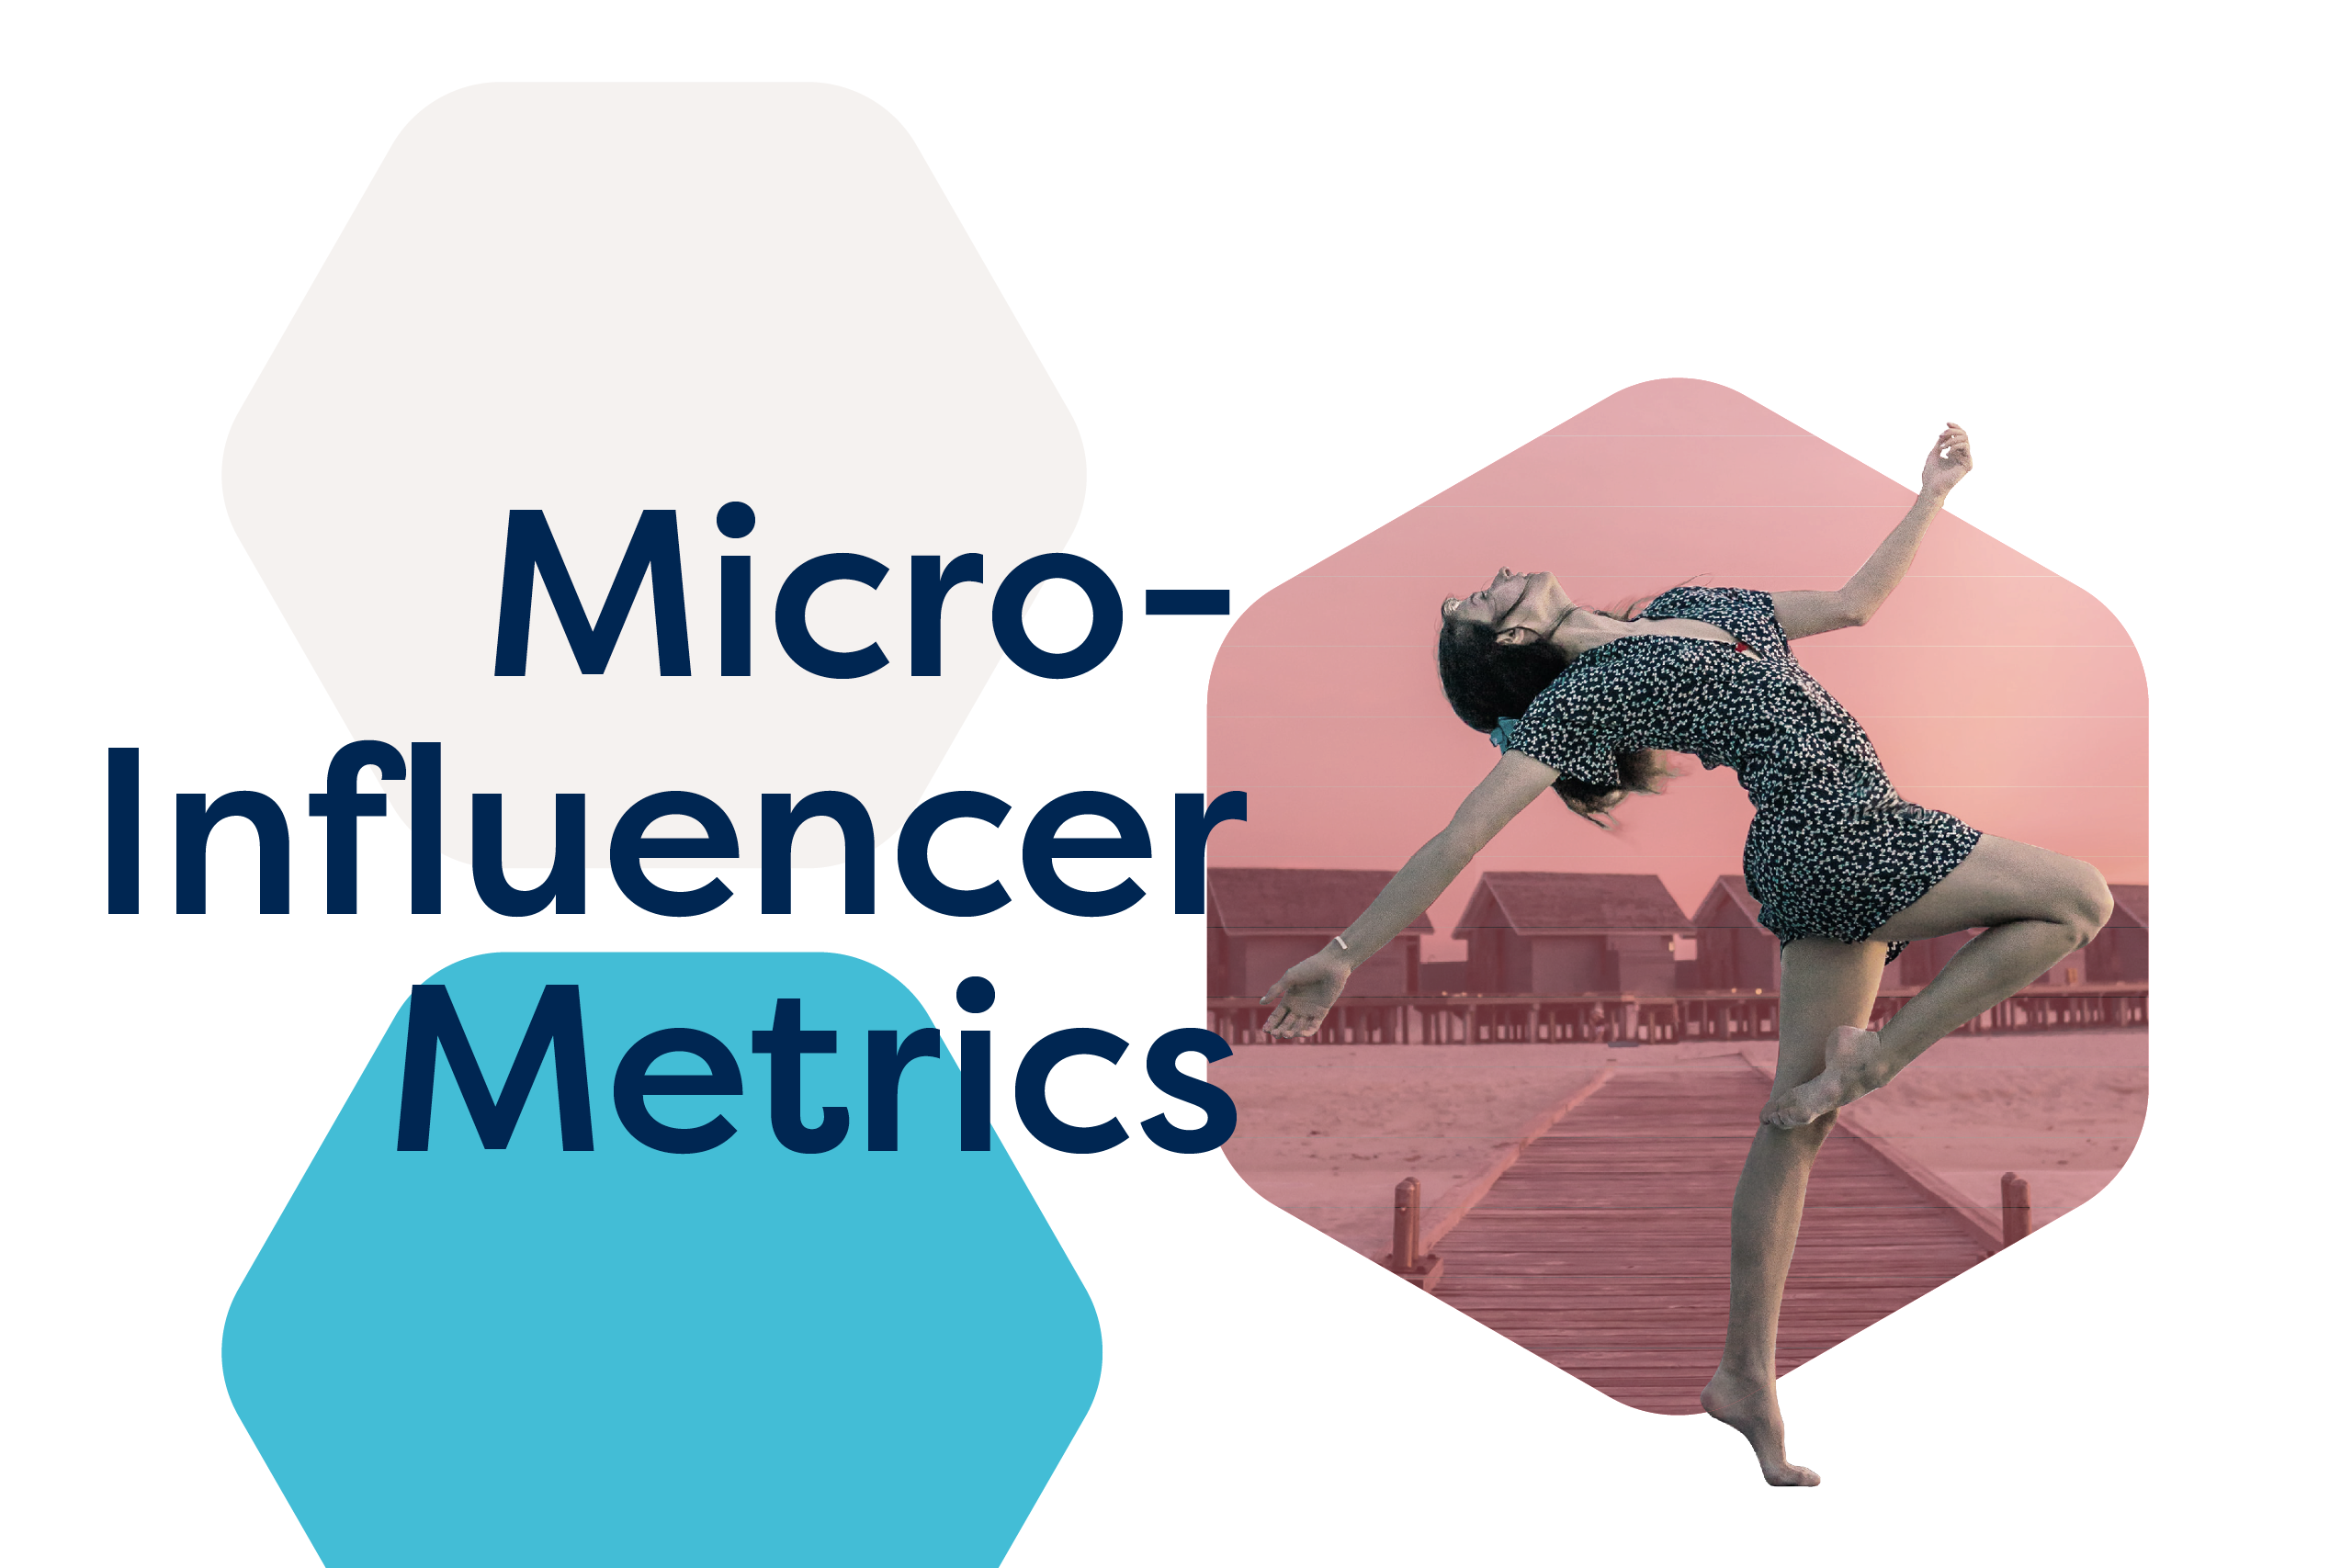 micro-influencer metrics